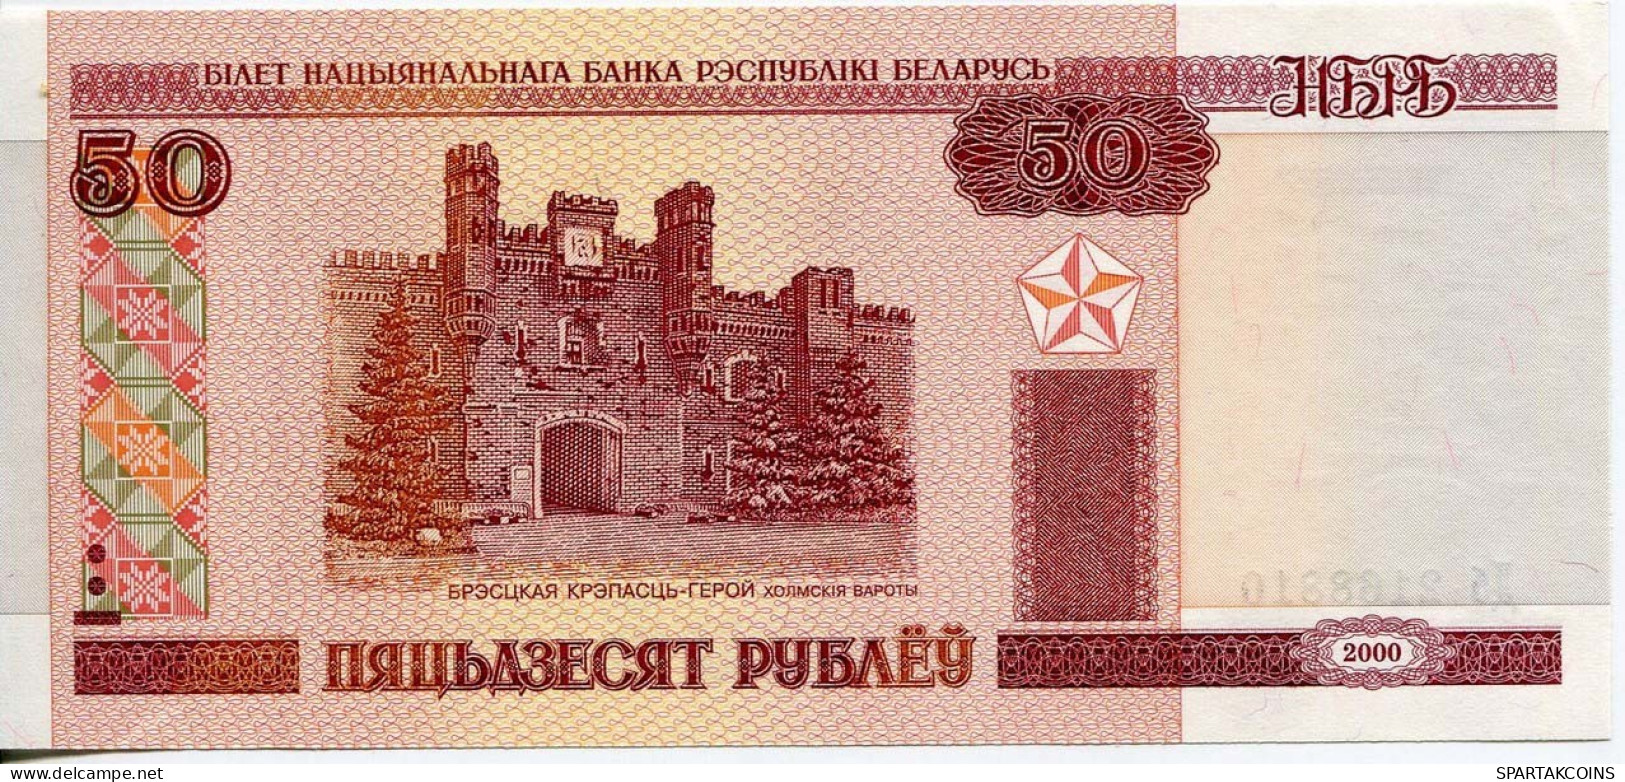 BELARUS 50 RUBLES 2000 Brest Fortress Paper Money Banknote #P10202.V - [11] Emisiones Locales